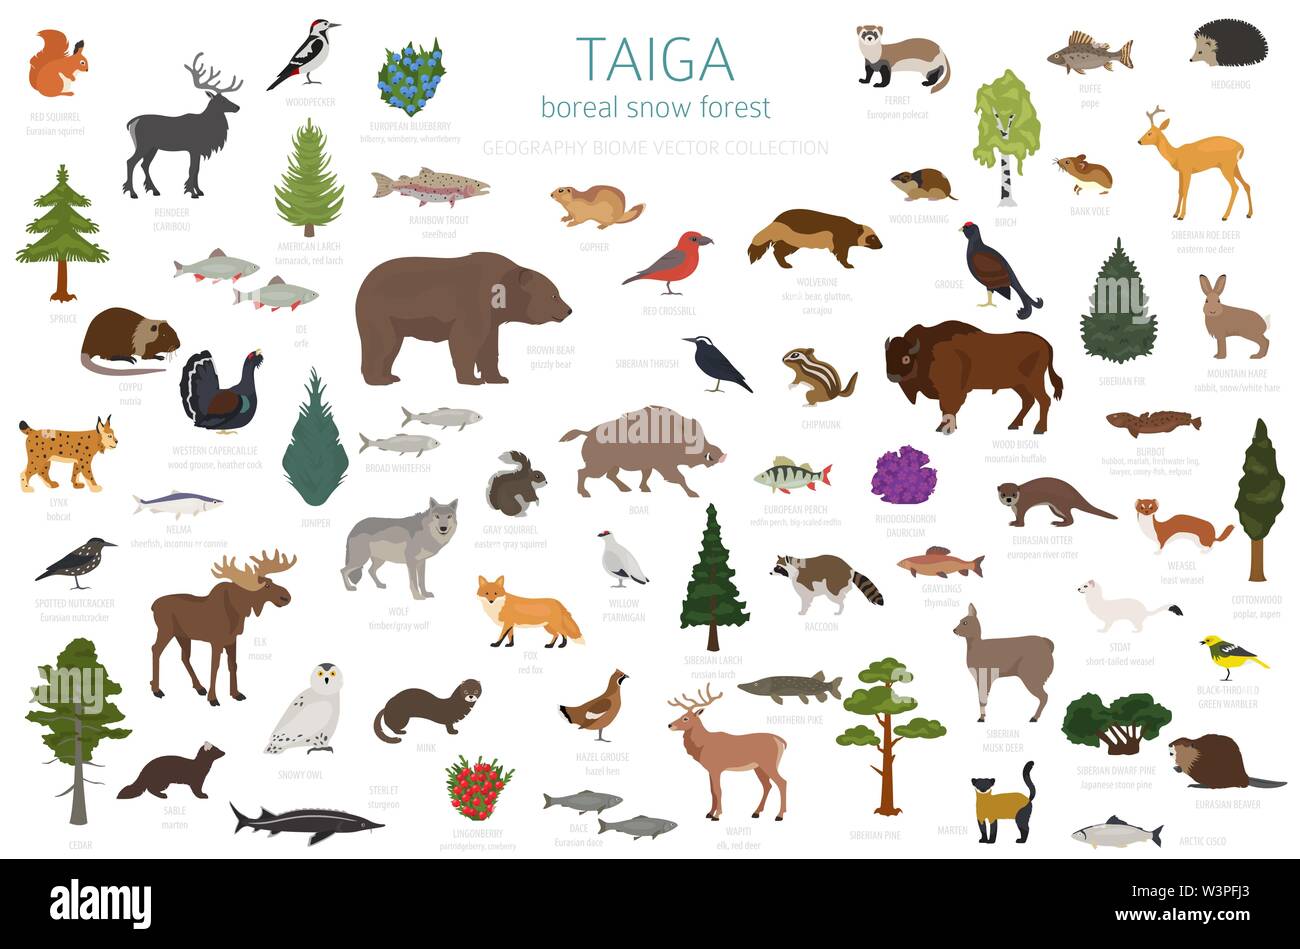 What Animals Live In The Taiga? - WorldAtlas